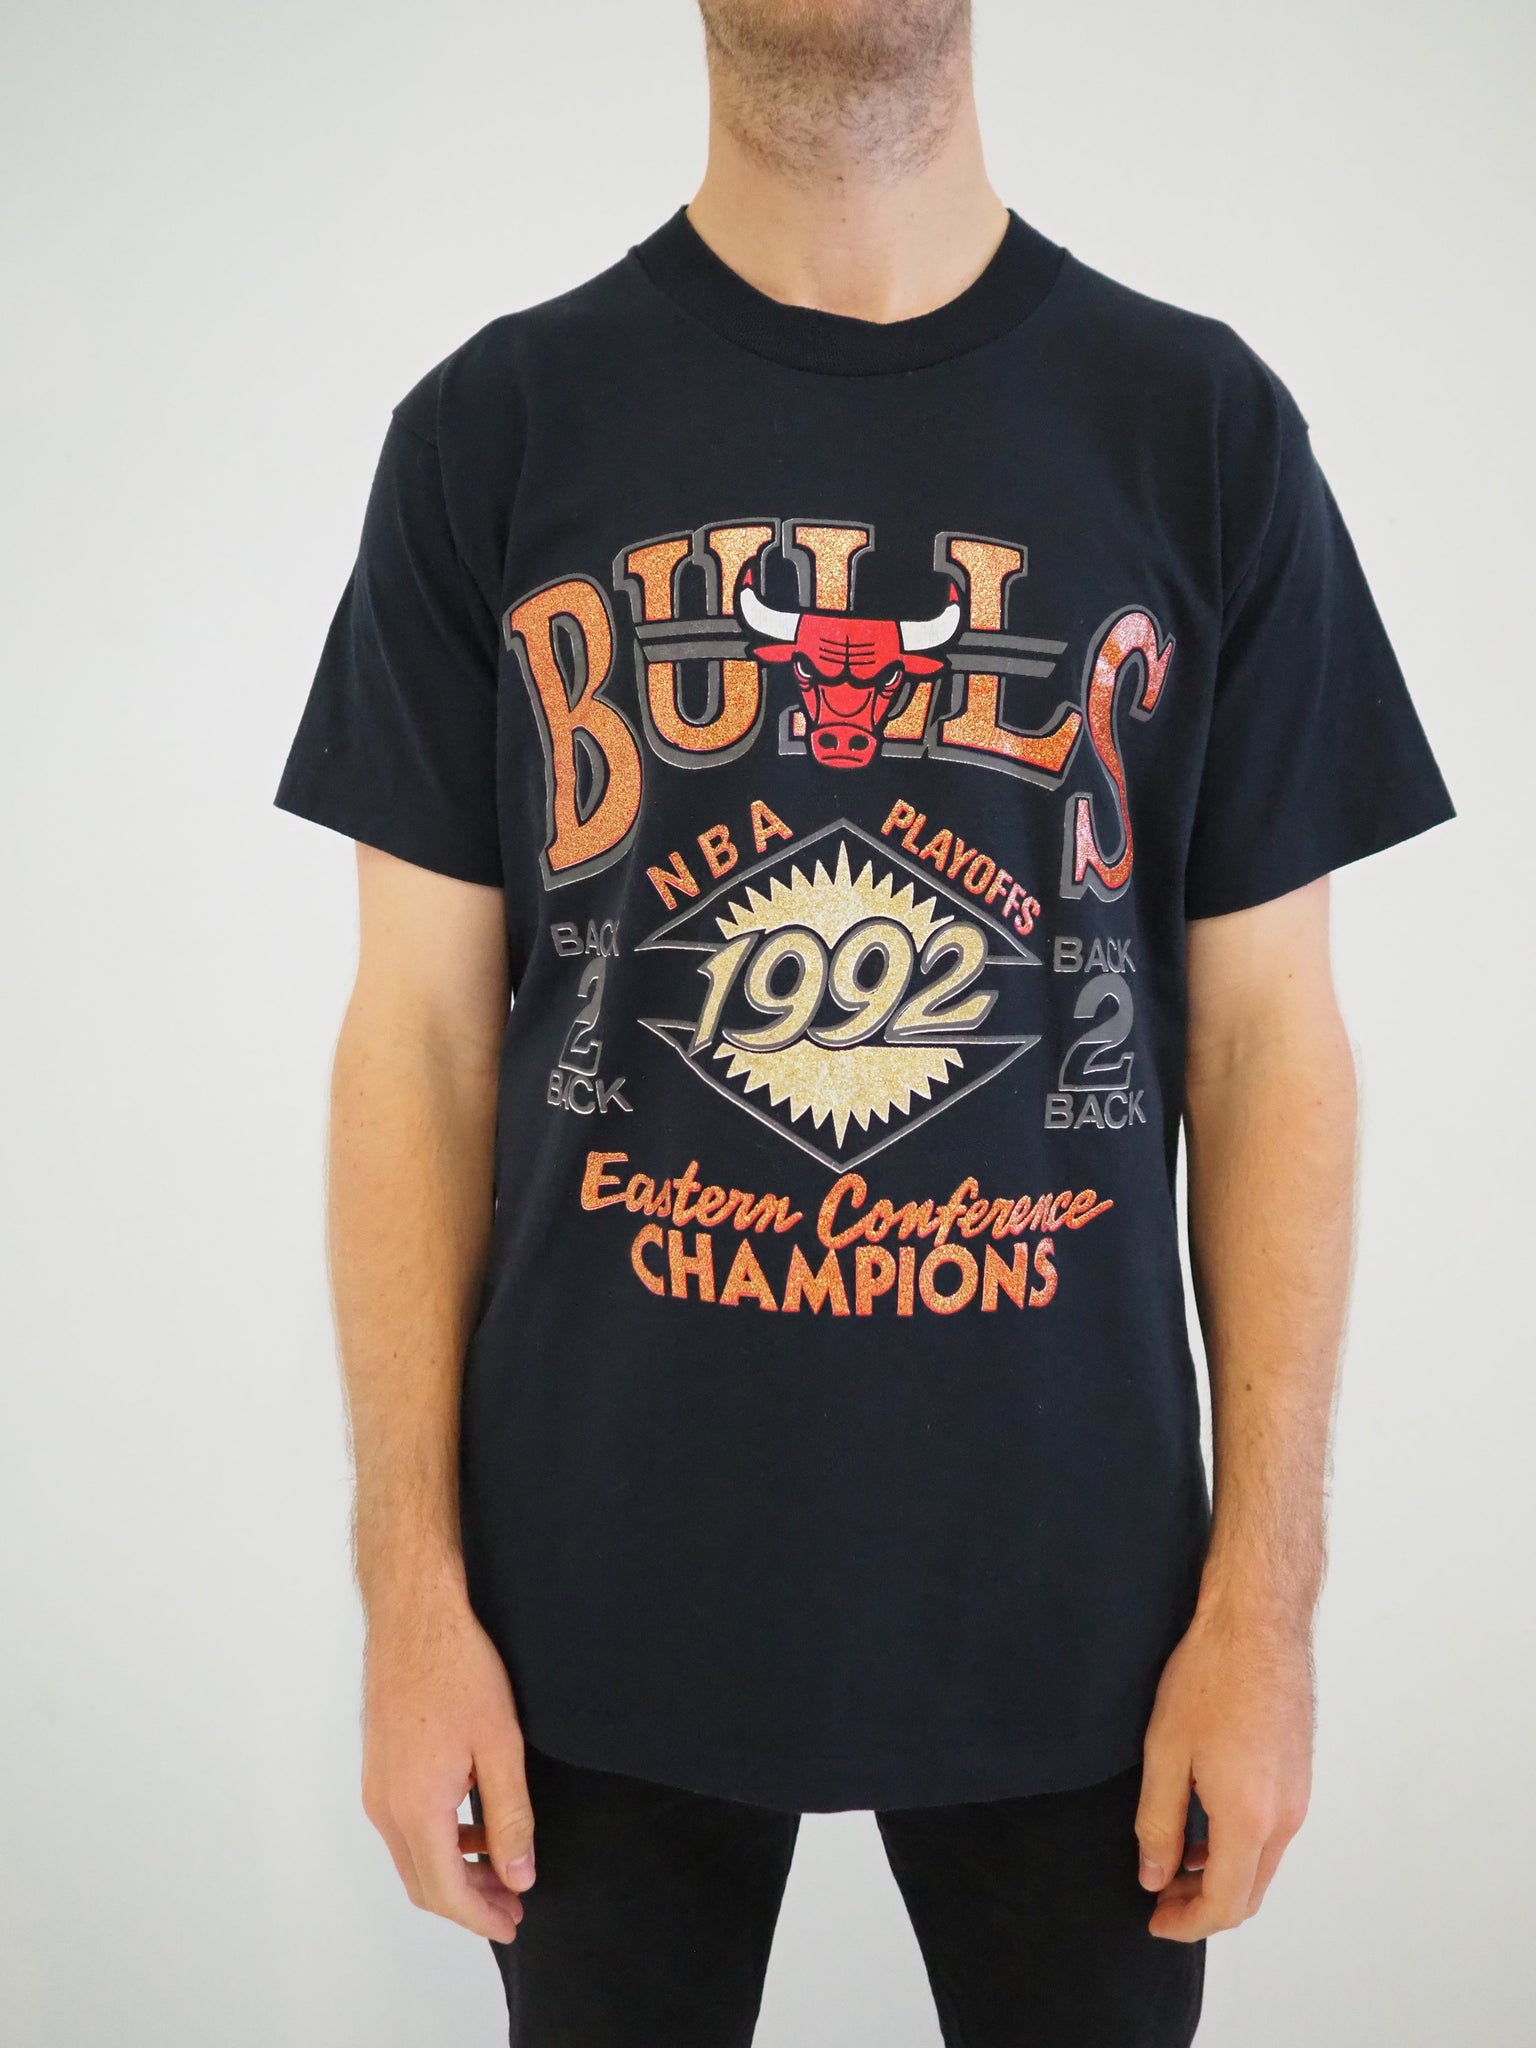 Vintage Chicago Bulls shirt 1992 NBA Chicago Bulls Back 2 Back Champions  T-Shirt. Large